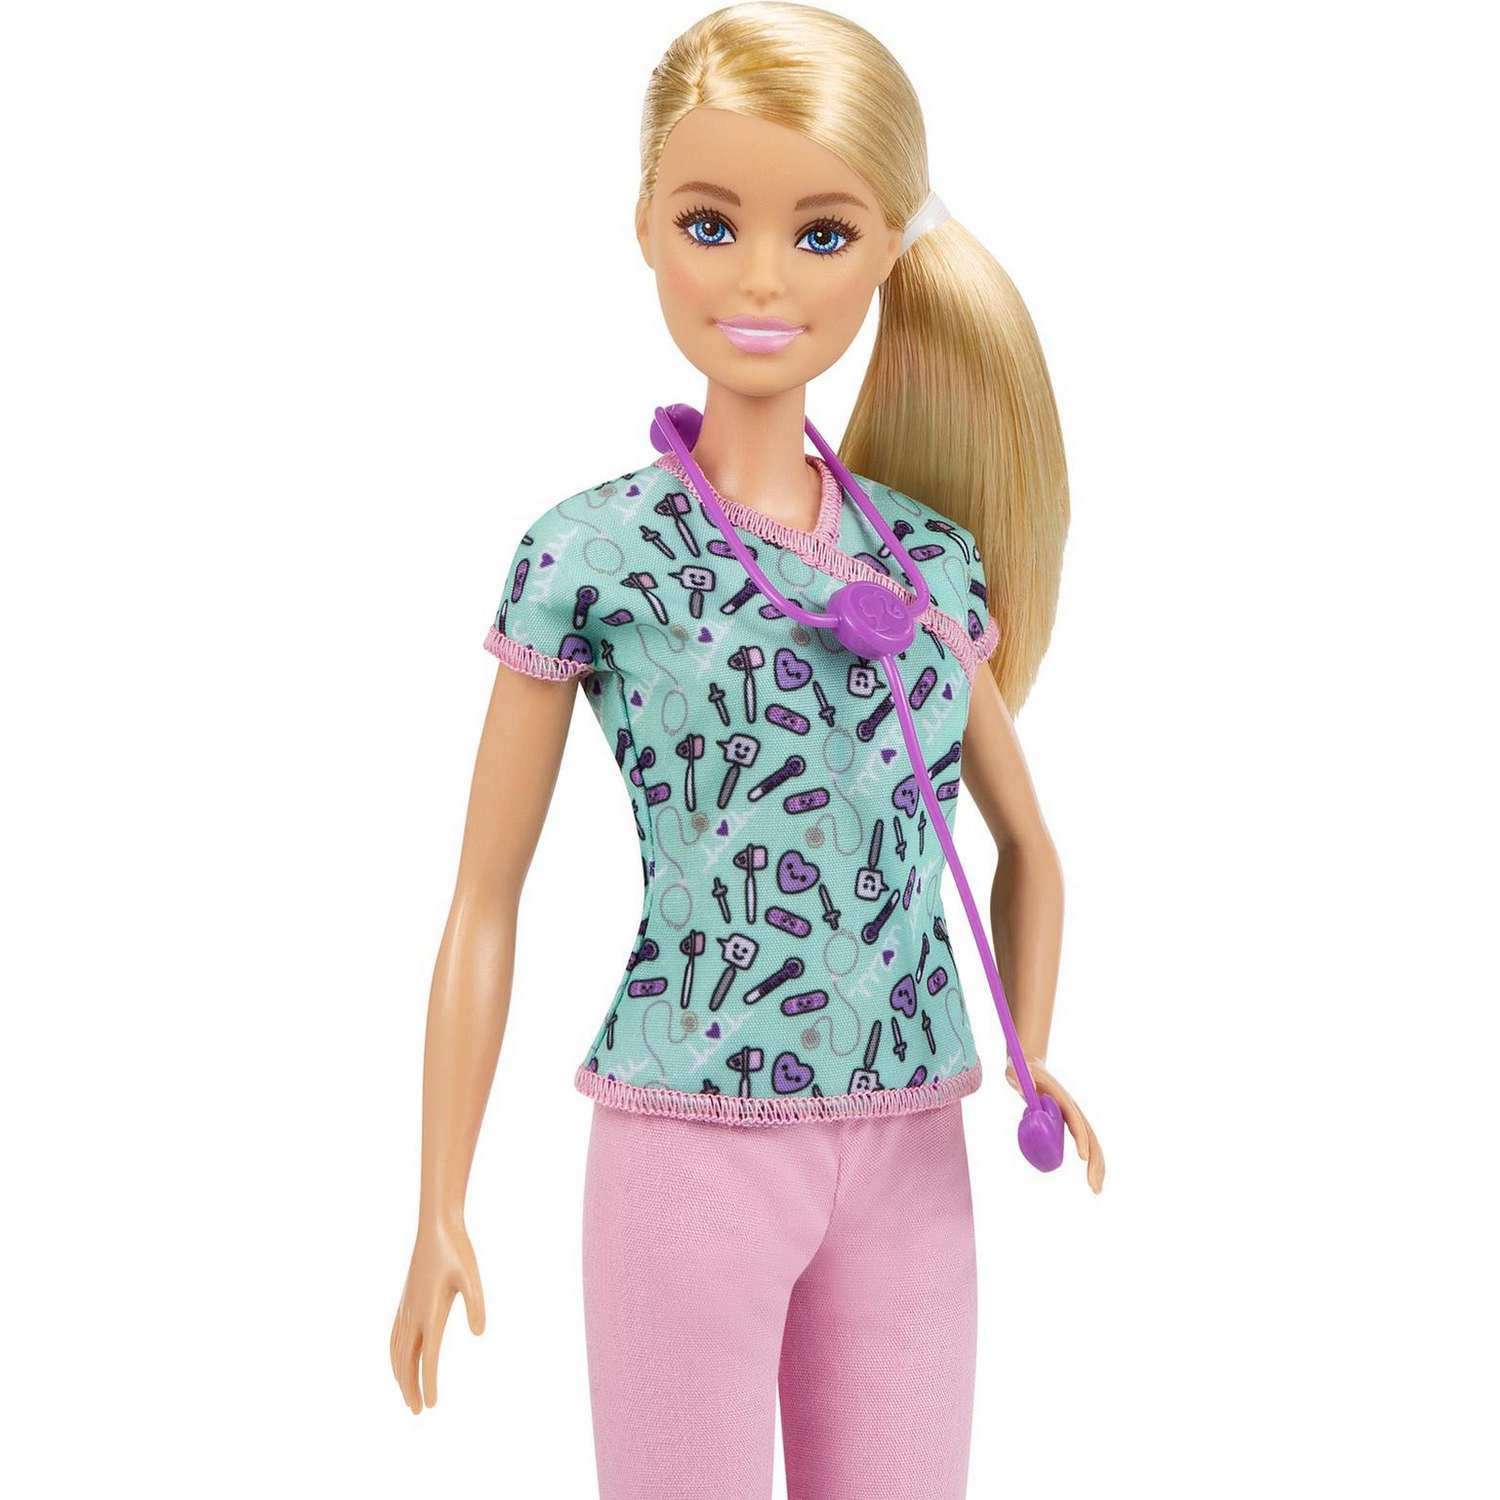 Кукла Barbie Кем быть? Медсестра GTW39 DVF50 - фото 7